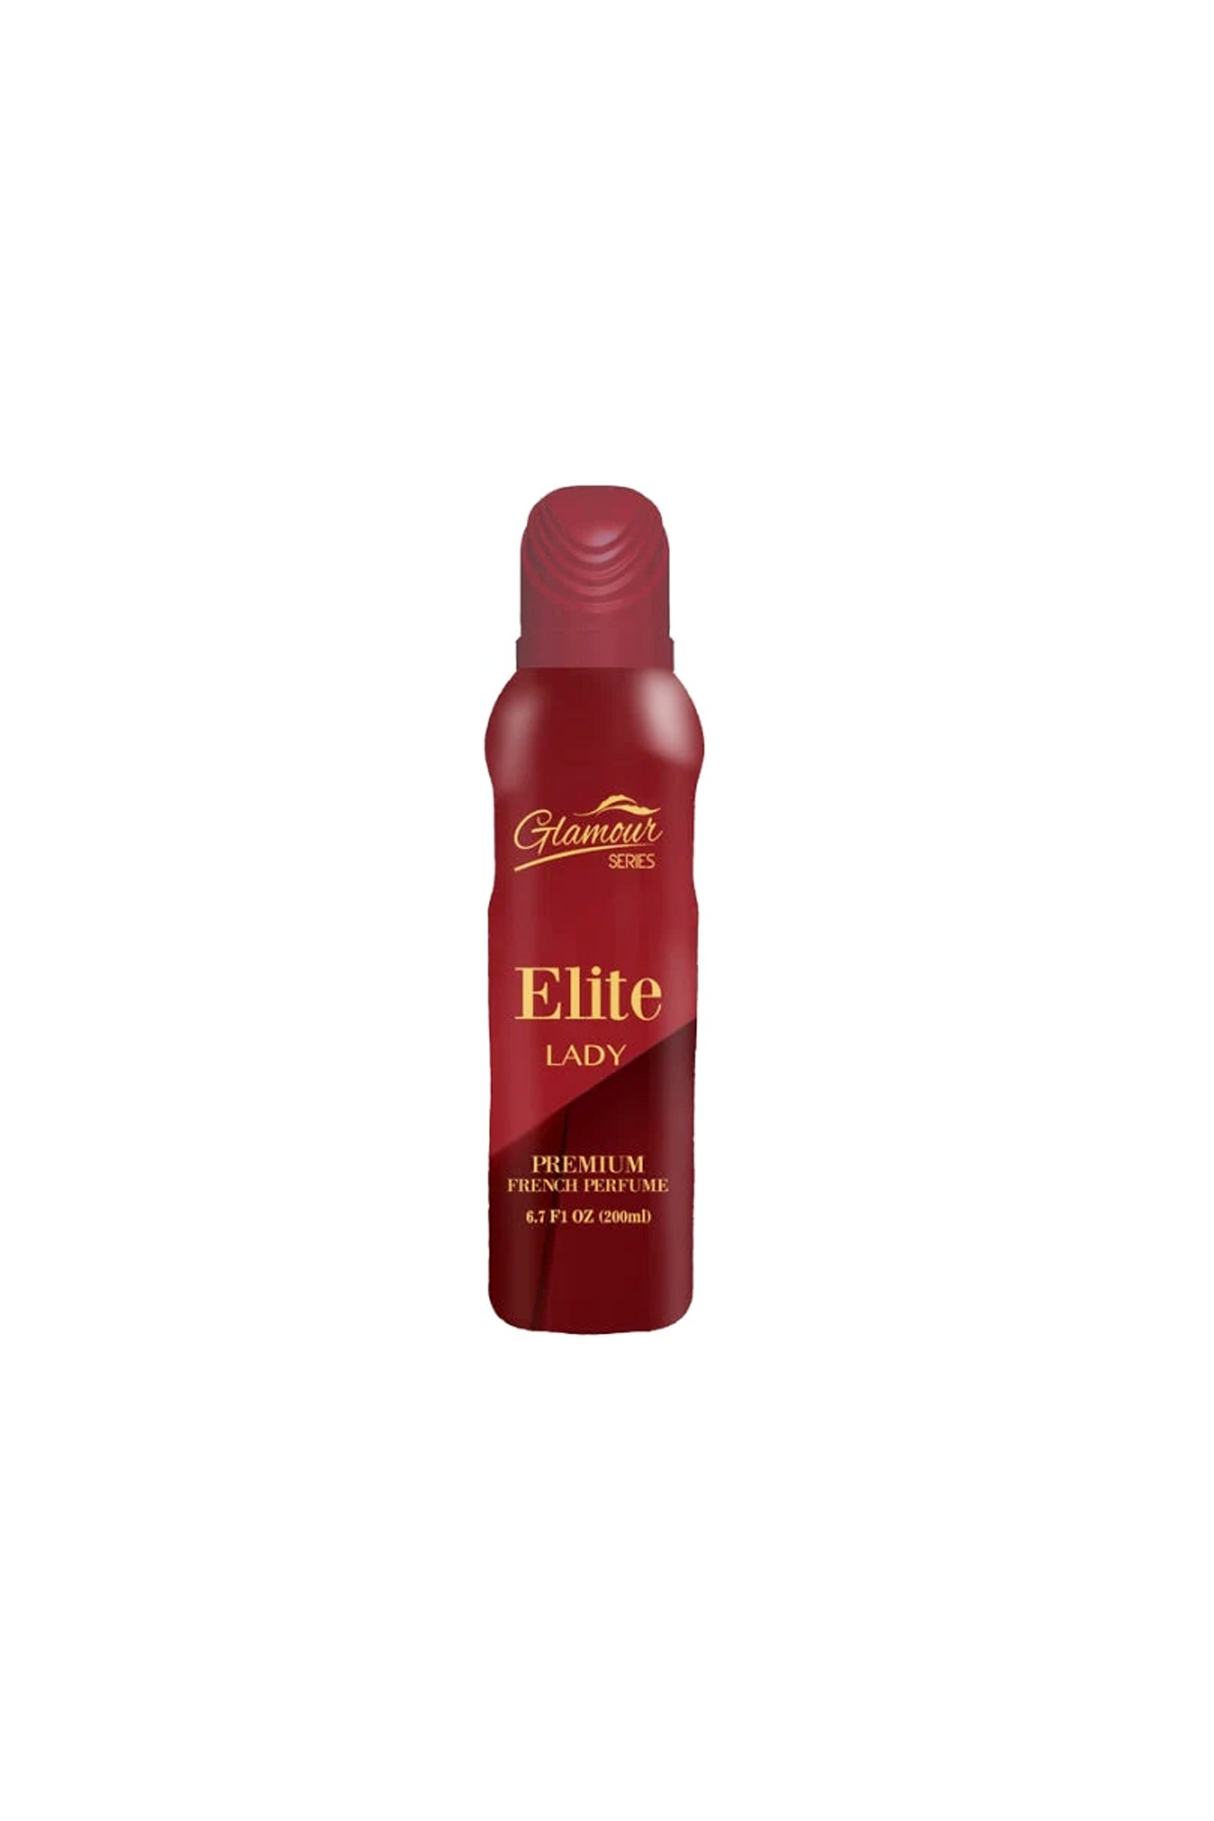 glamour elite deodorant body spray 200ml for women